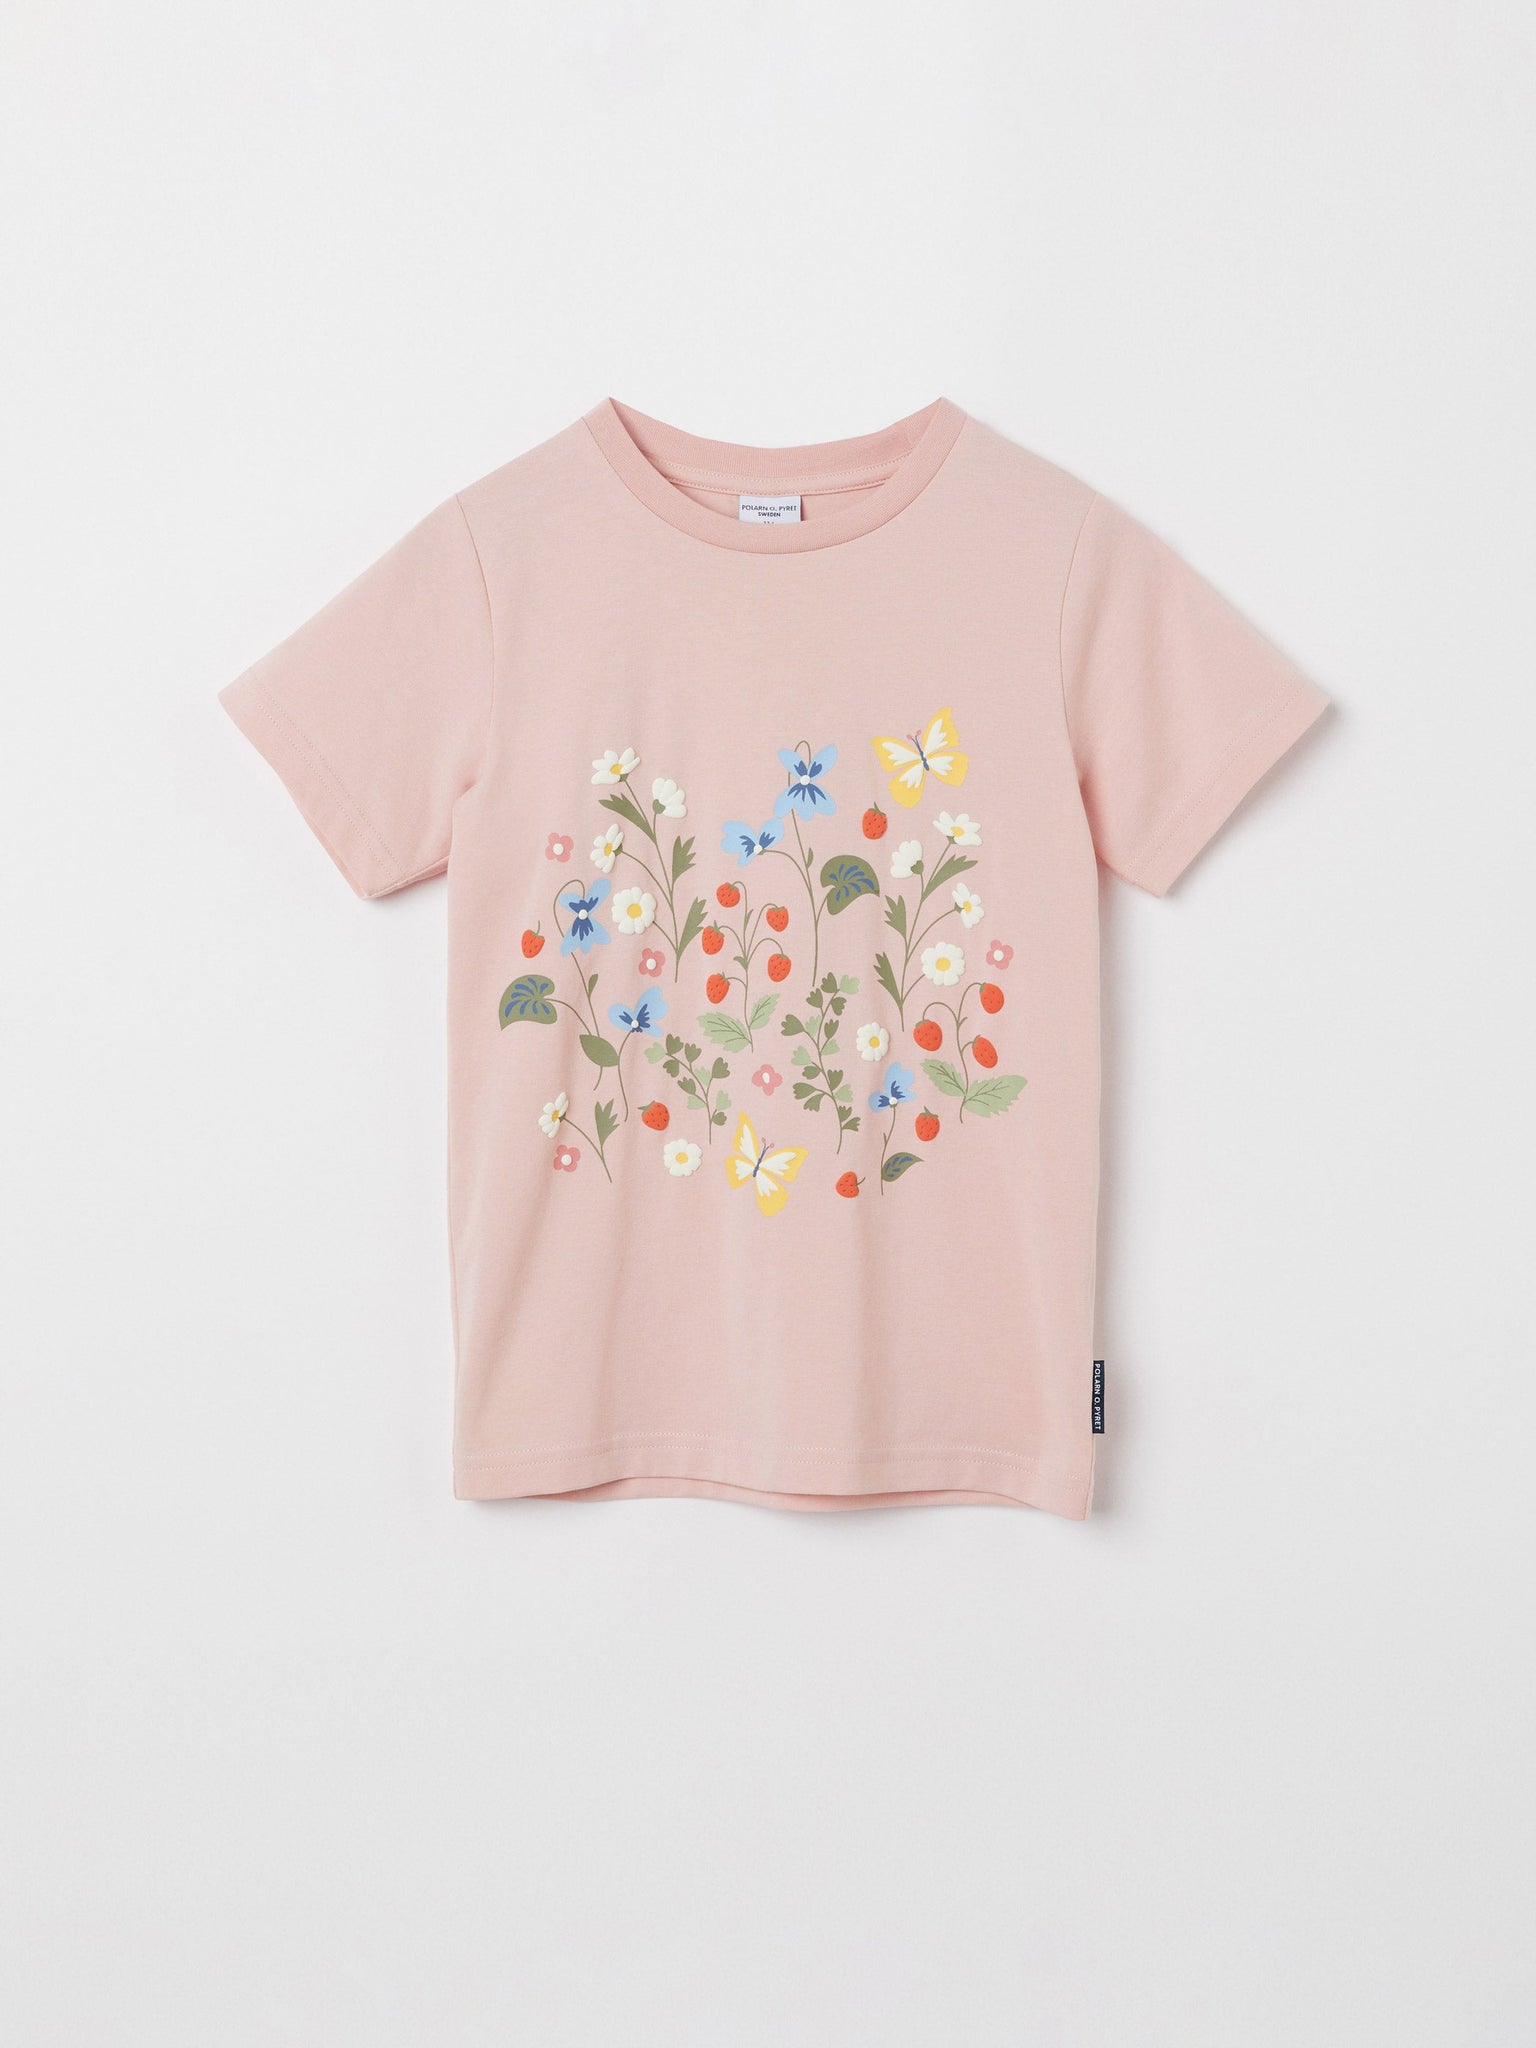 Floral Print Kids T-Shirt